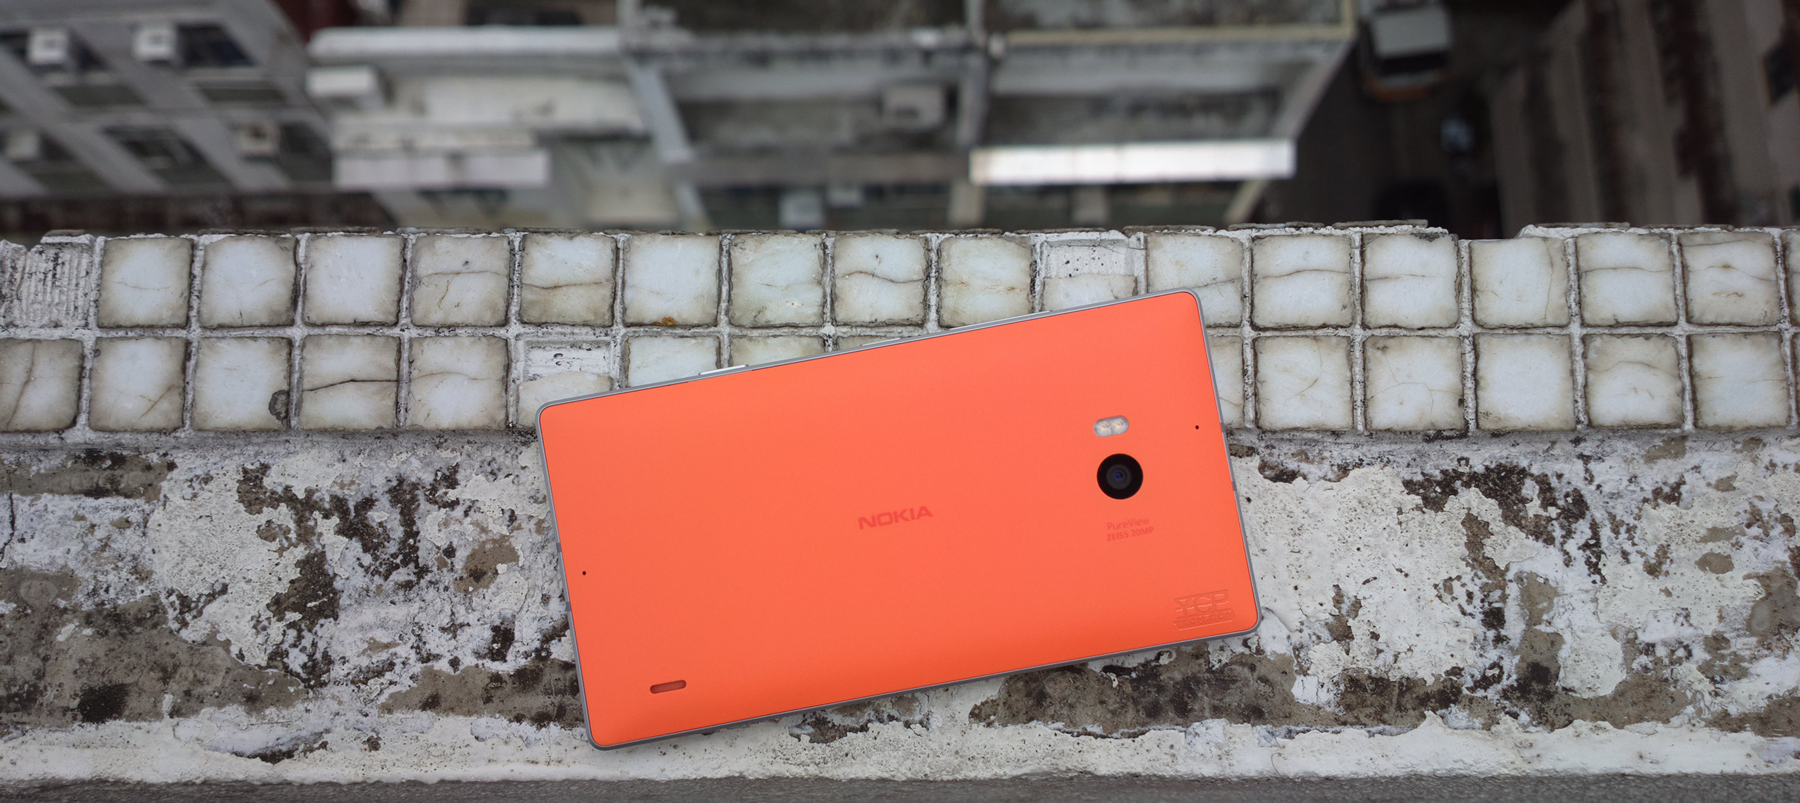 YCPtech reviews the Nokia Lumia 930